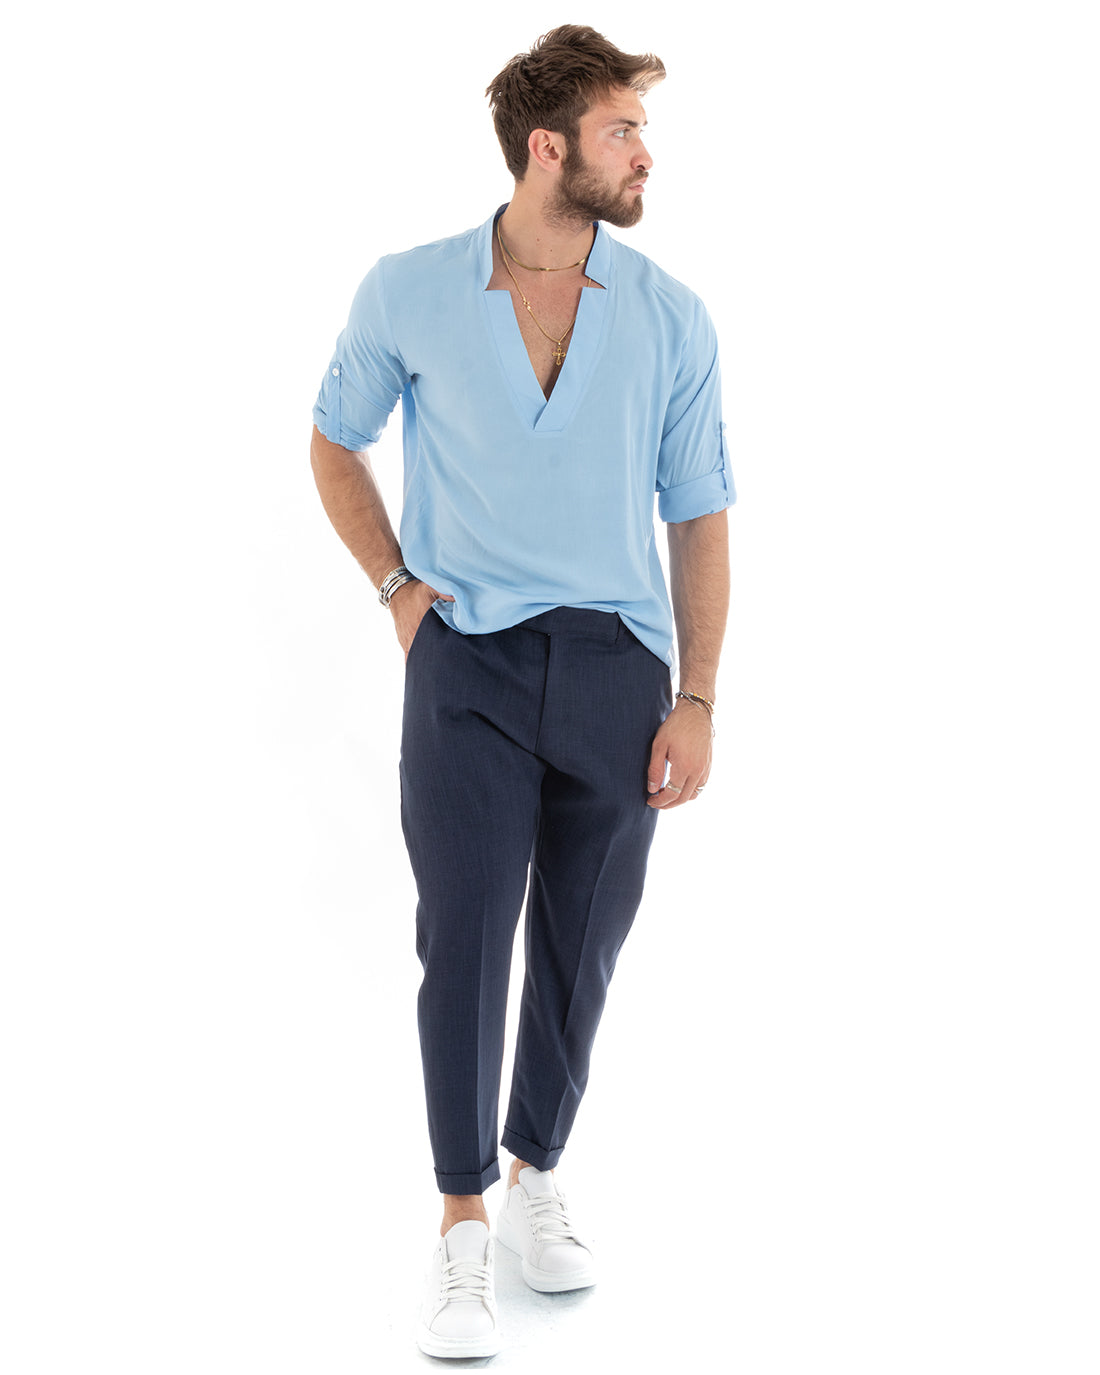 Men's Shirt V-Neck Long Sleeve Soft Light Viscose Light Blue GIOSAL-C2696A